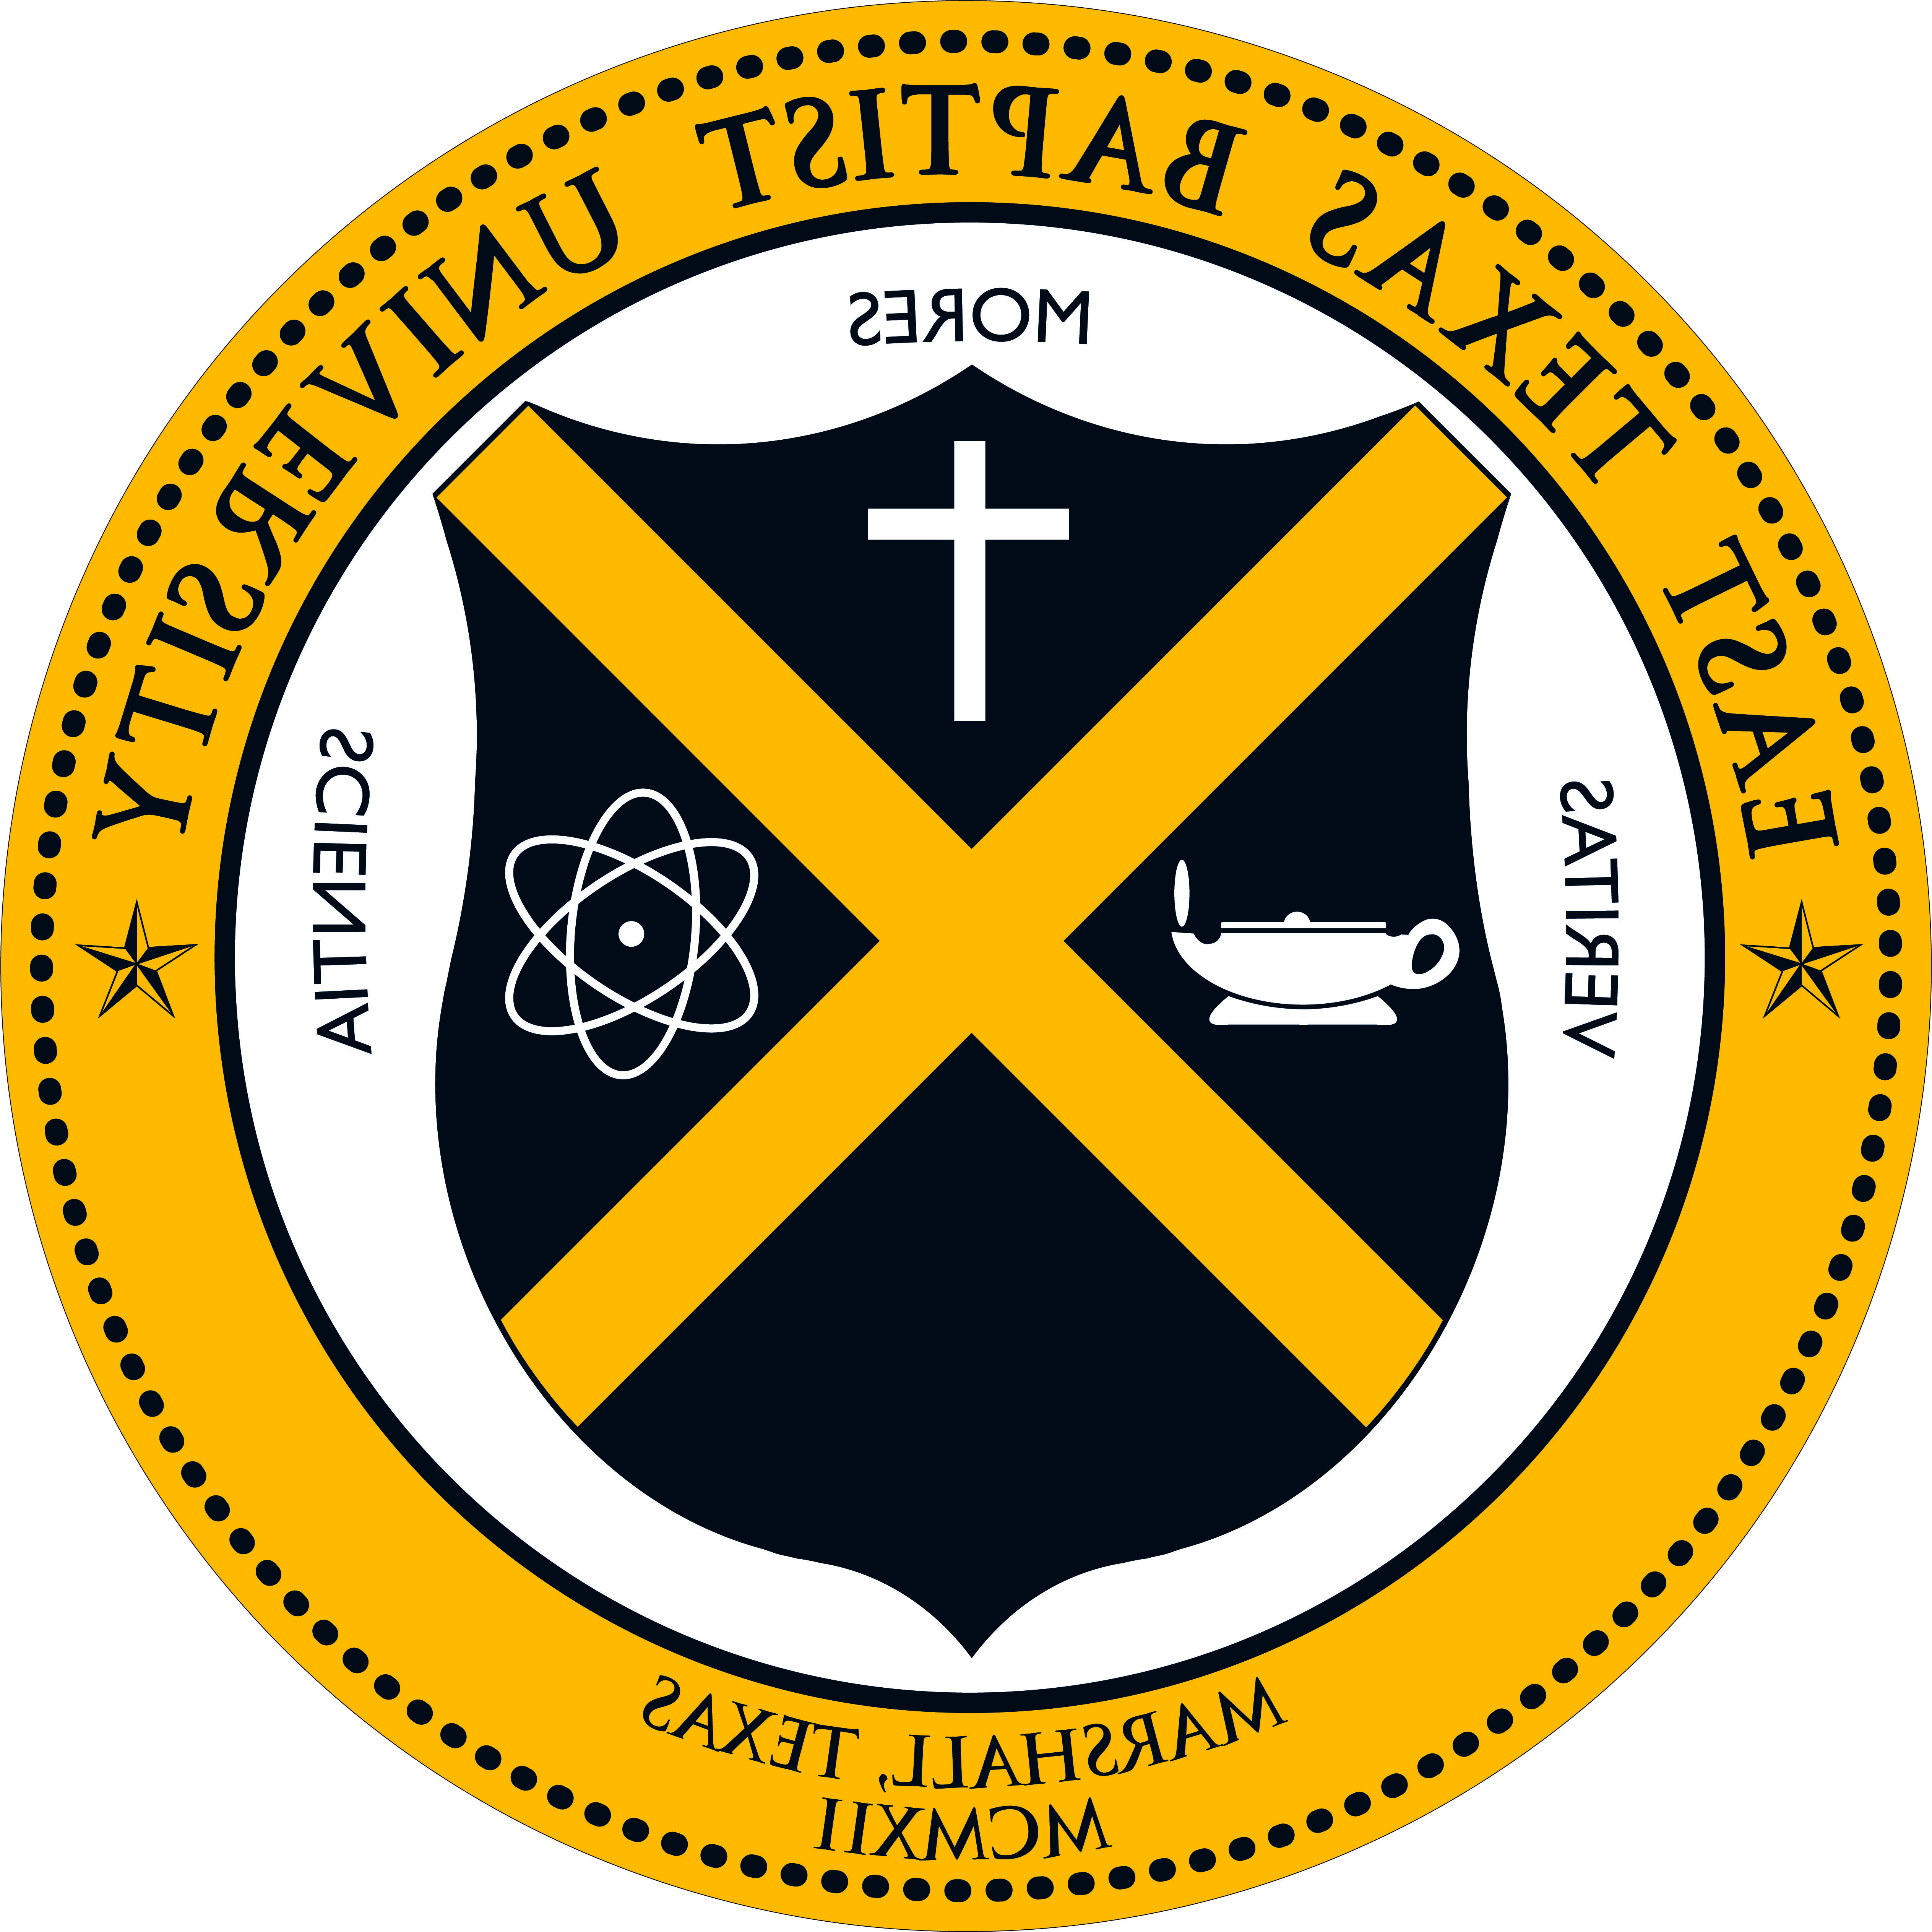 ETBU University Seal